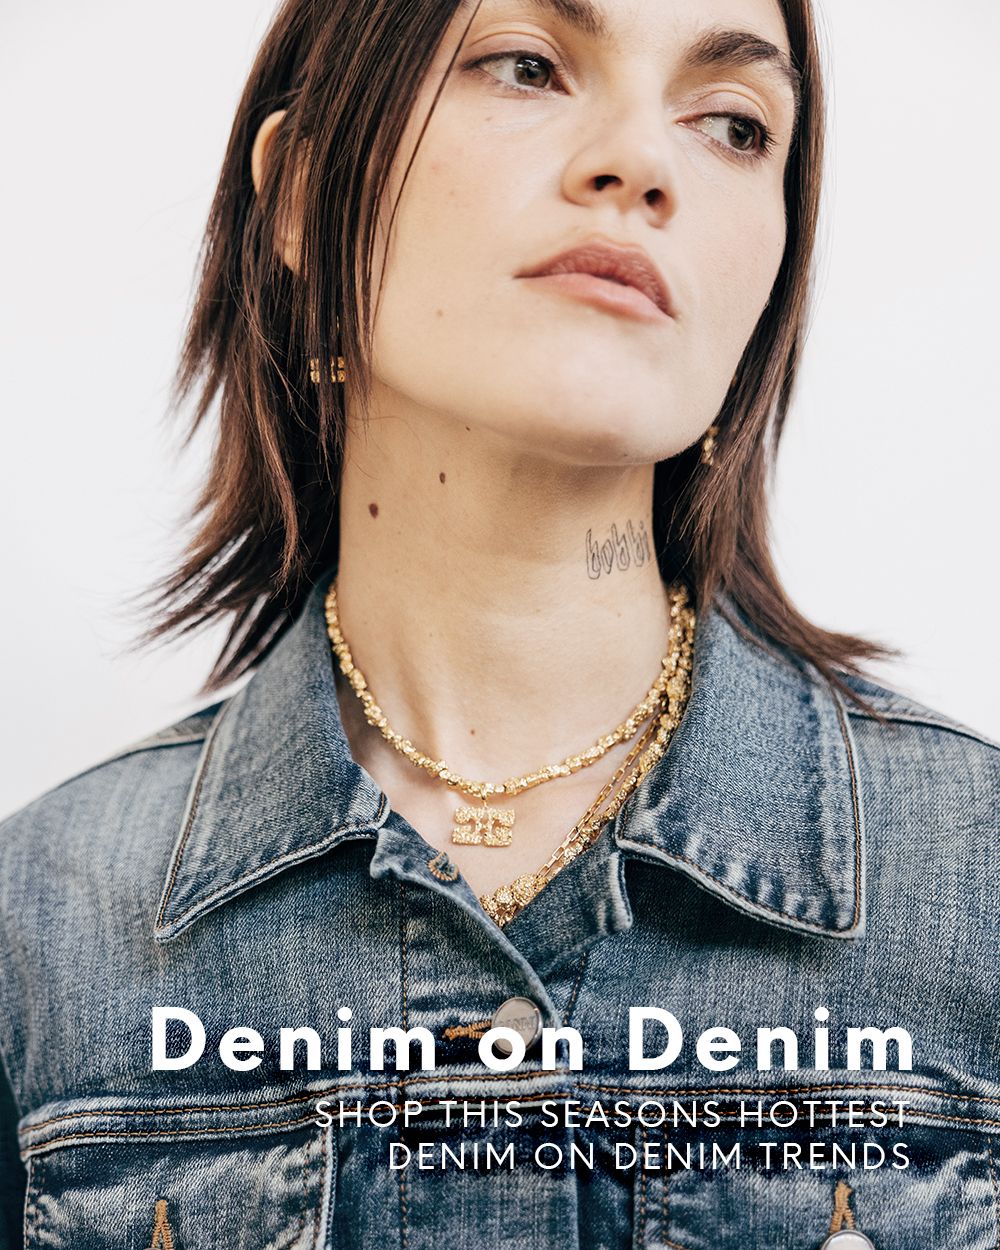 Denim on Denim | Shop denim trends at Byflou.com